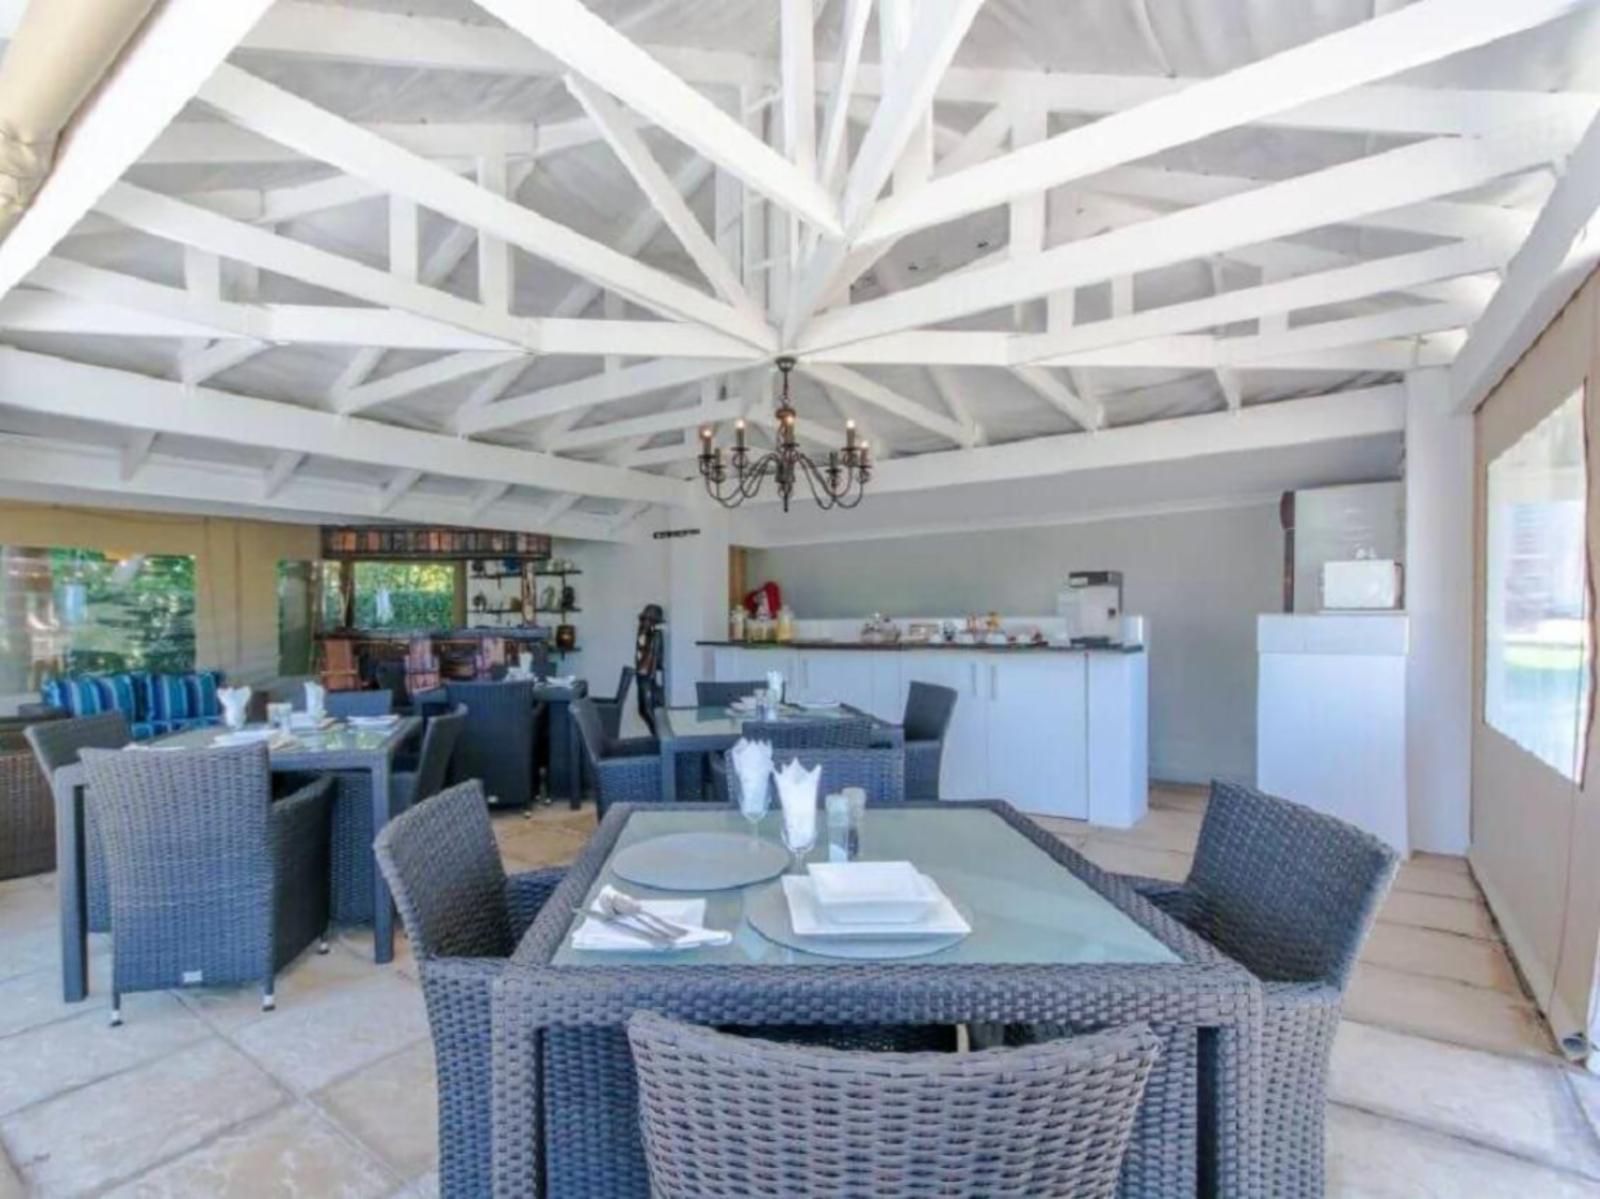 Villa Capri Guest House Ballito Kwazulu Natal South Africa Restaurant, Bar